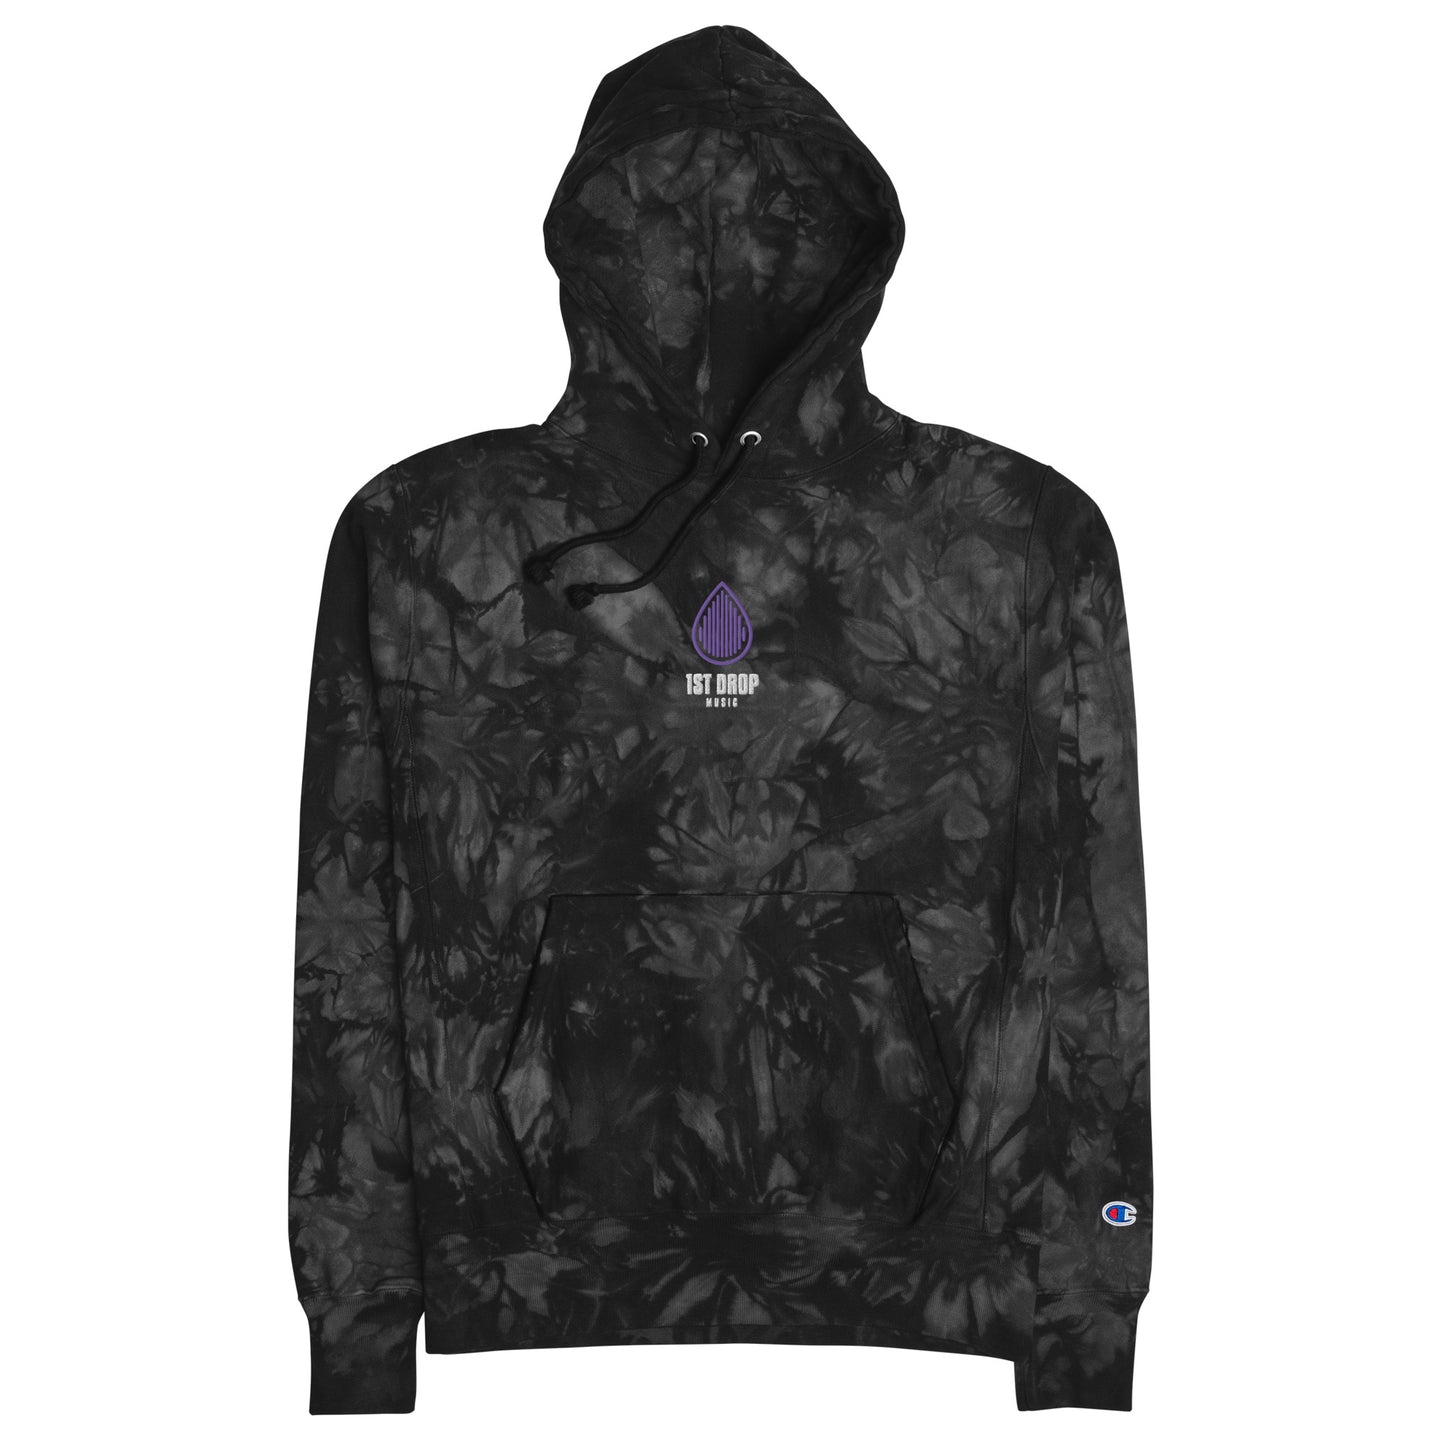 1st Drop Music Embroidered Unisex Champion tie-dye hoodie